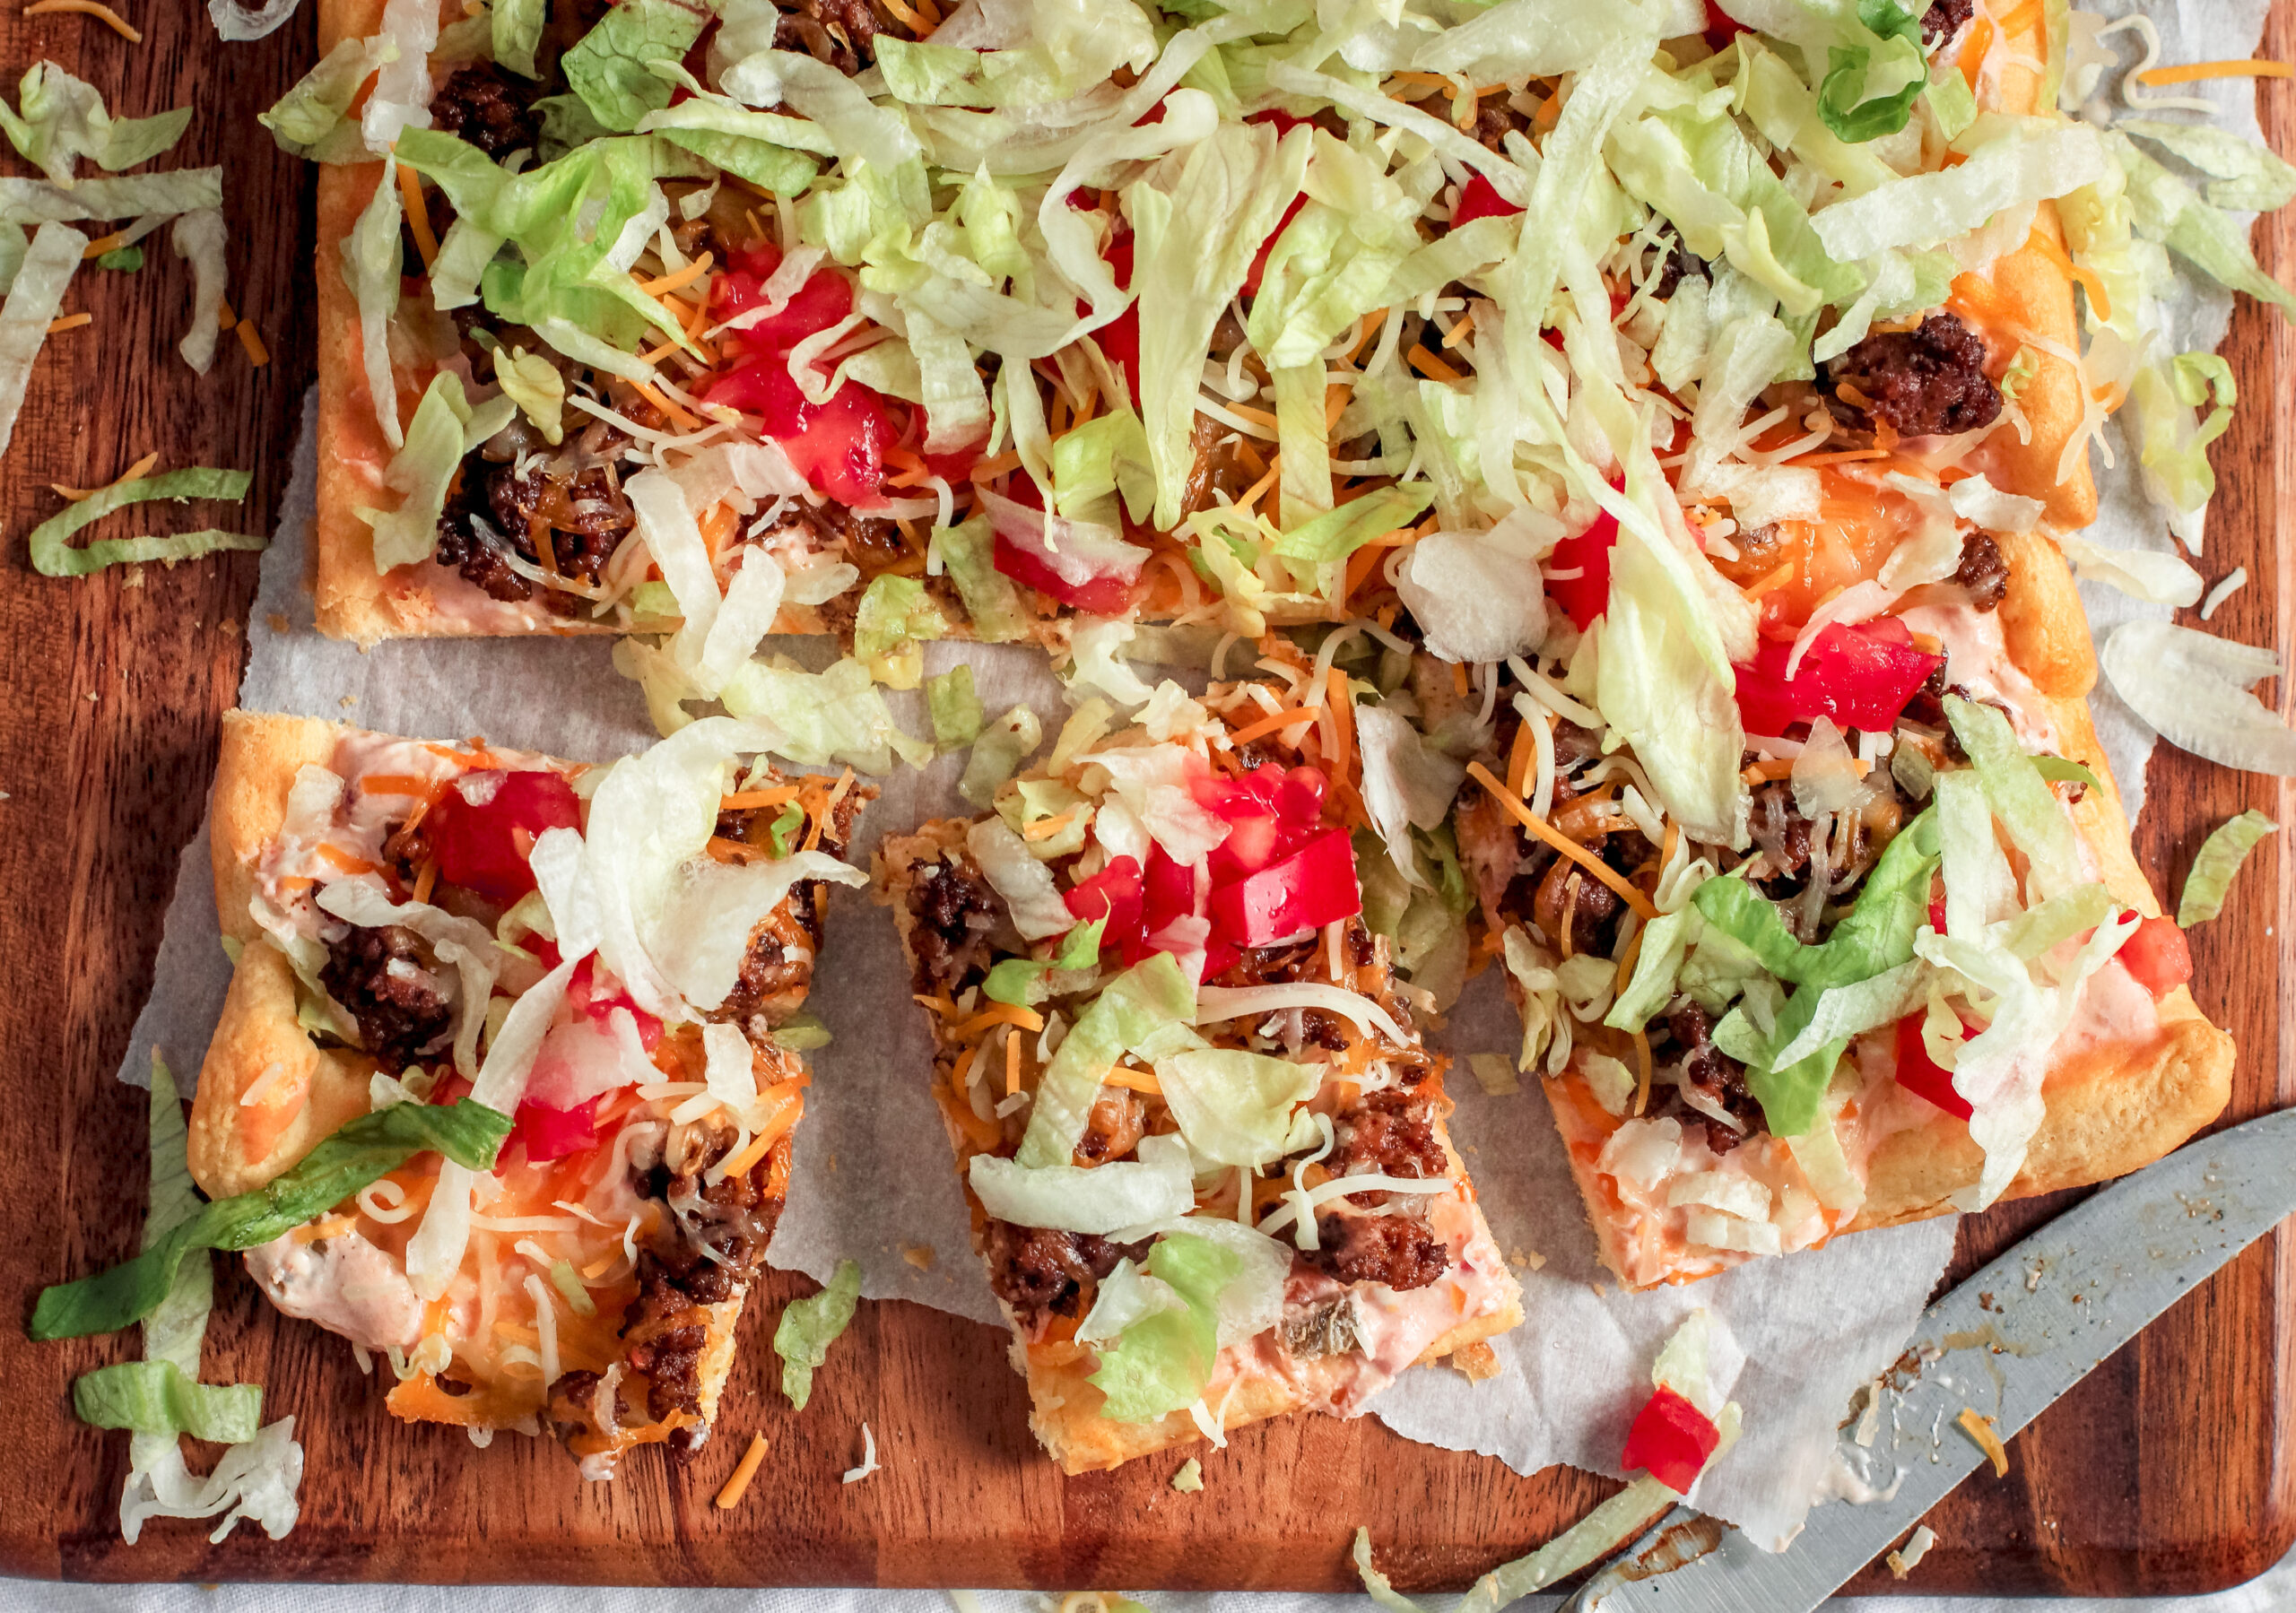 Taco Crescent Roll Pizza - Restless Chipotle